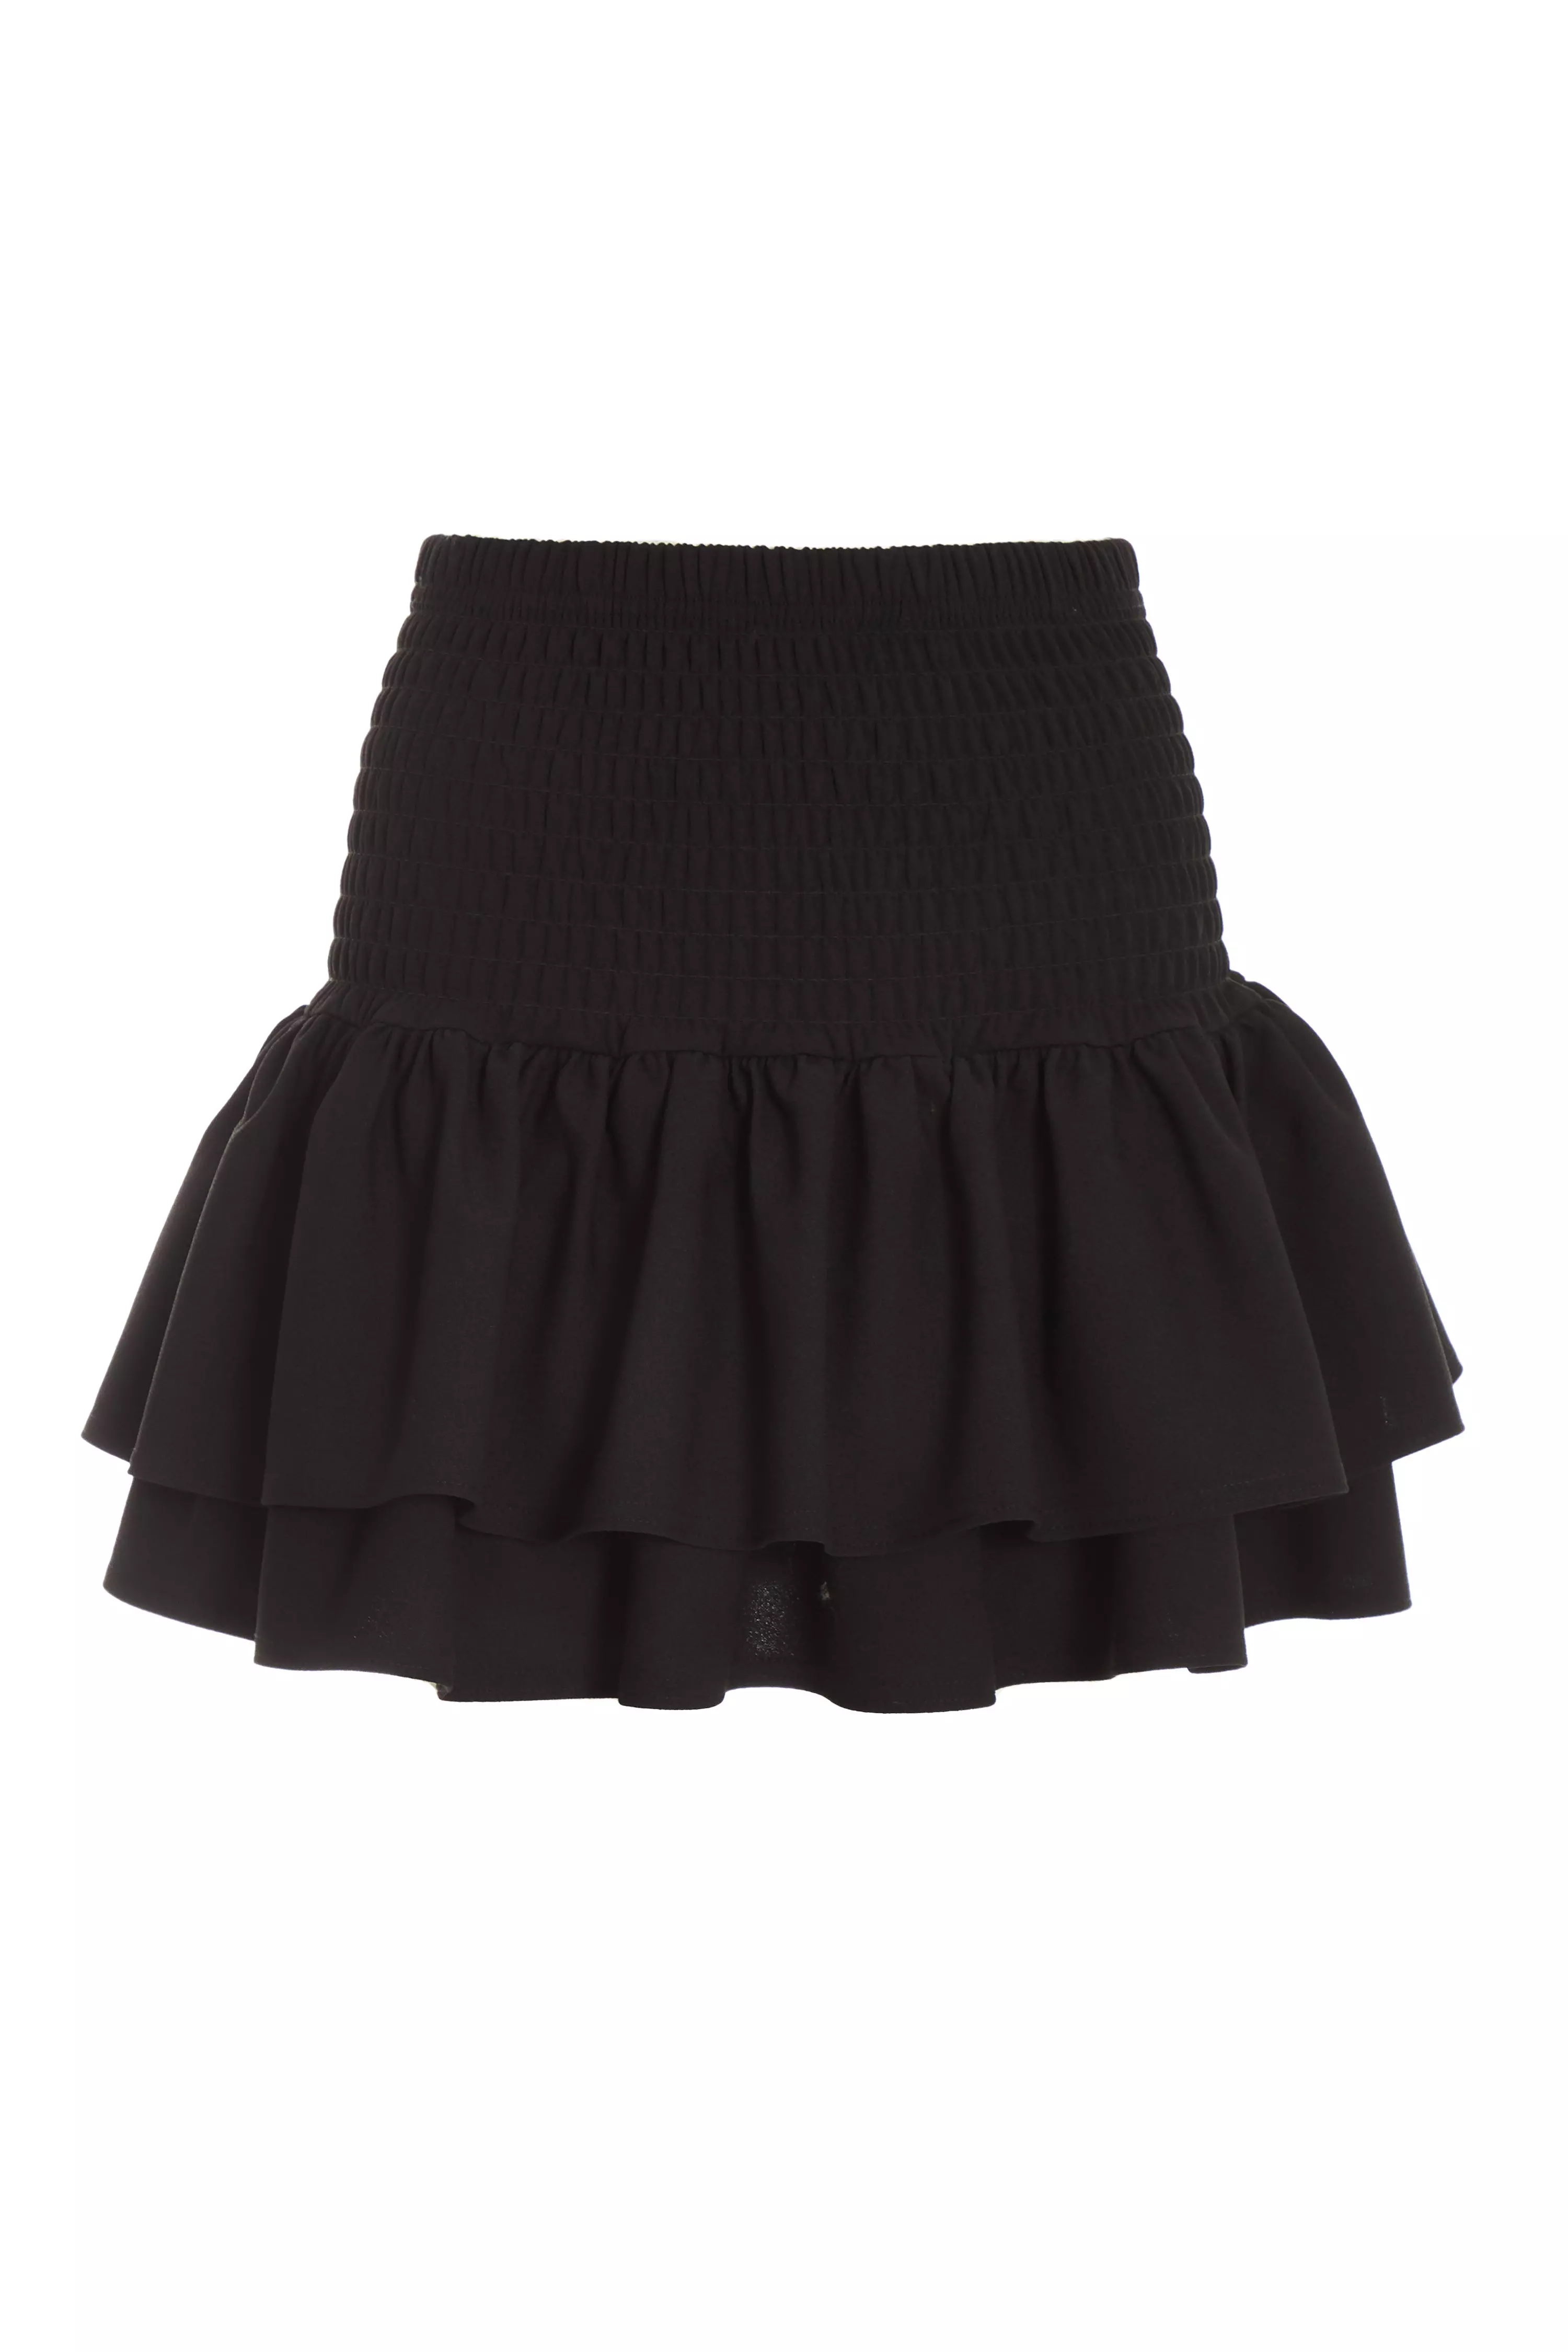 Black Ruched Frill Mini Skirt - QUIZ Clothing